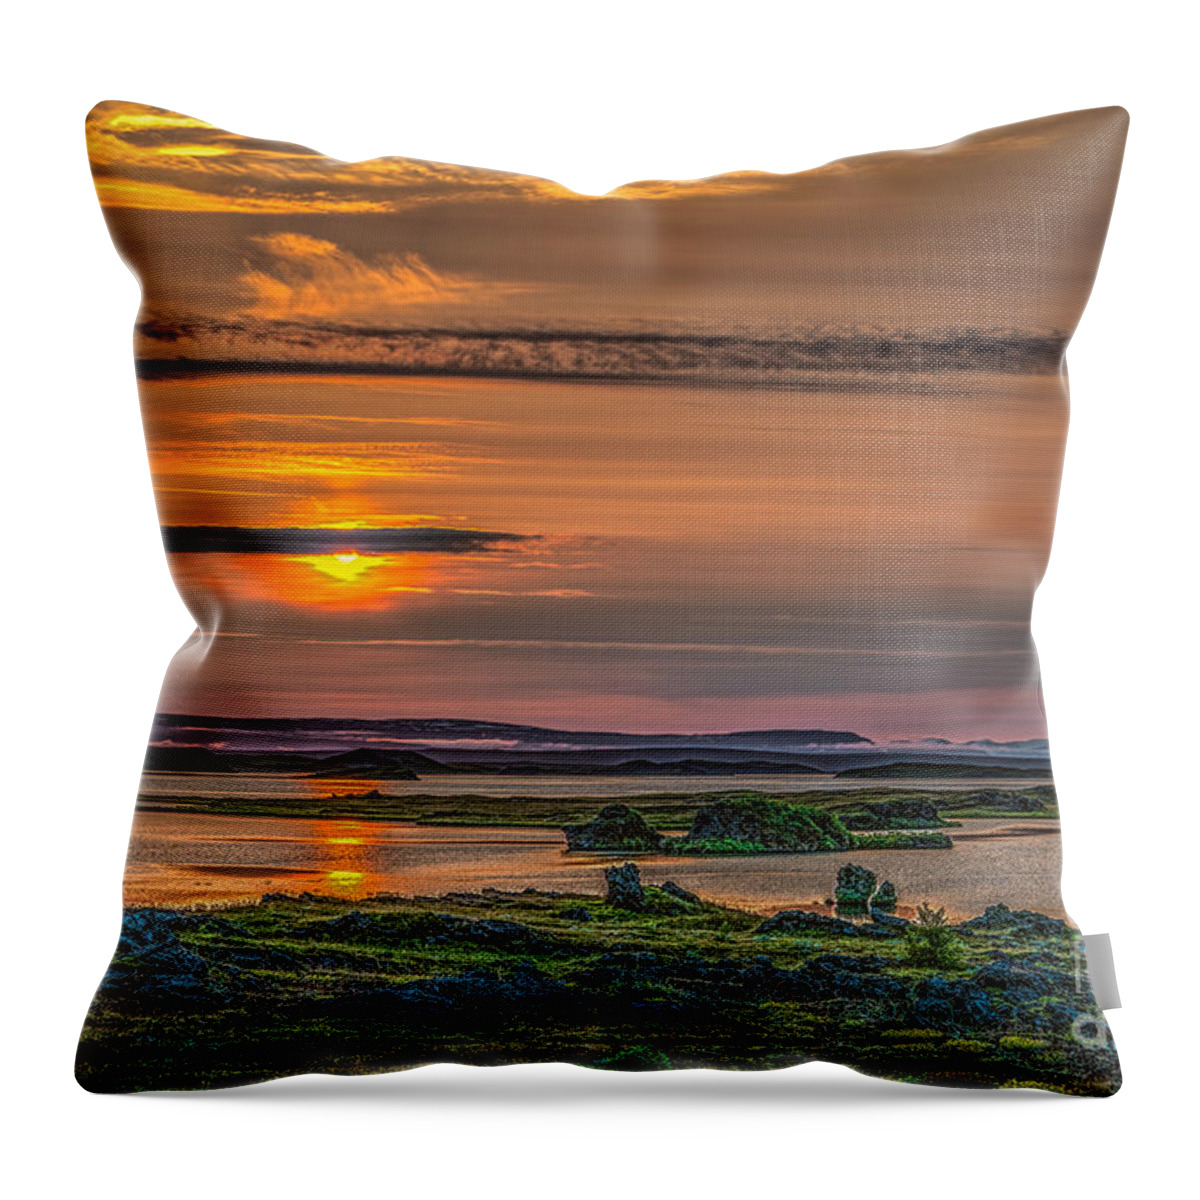 Iceland Throw Pillow featuring the photograph Icelandic sunset by Izet Kapetanovic